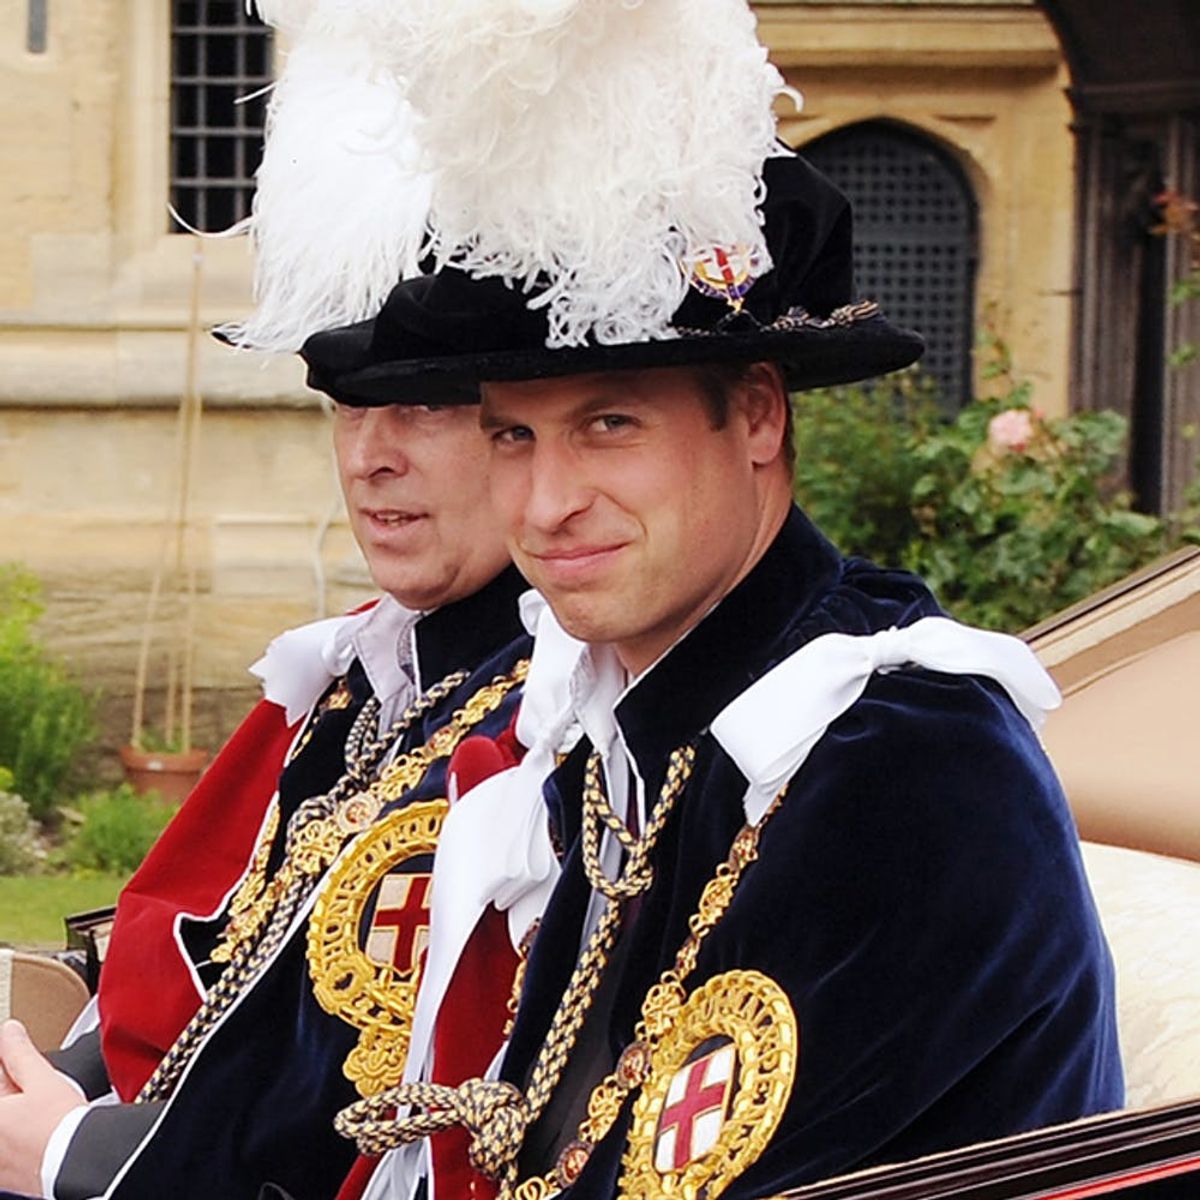 Prince William Just Dressed Like an IRL Disney Prince